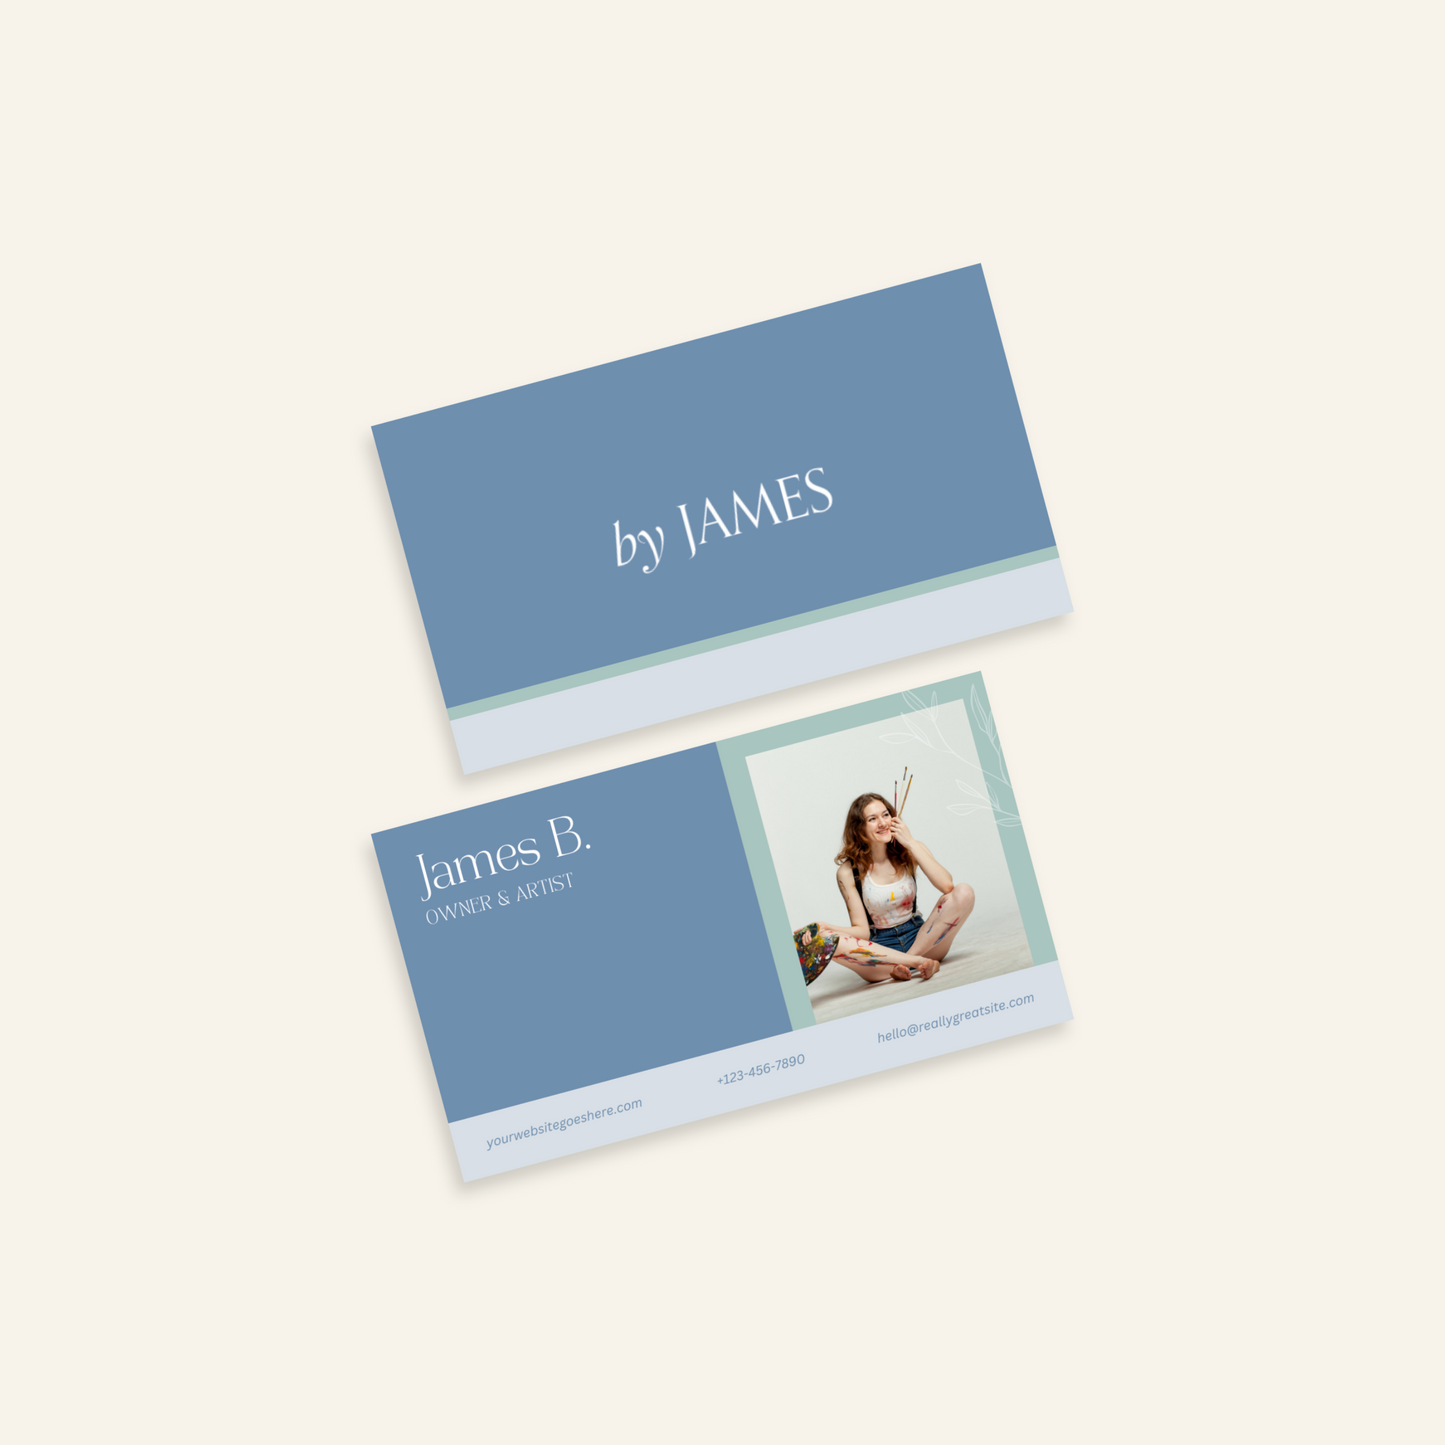 James - Stationary Kit Template